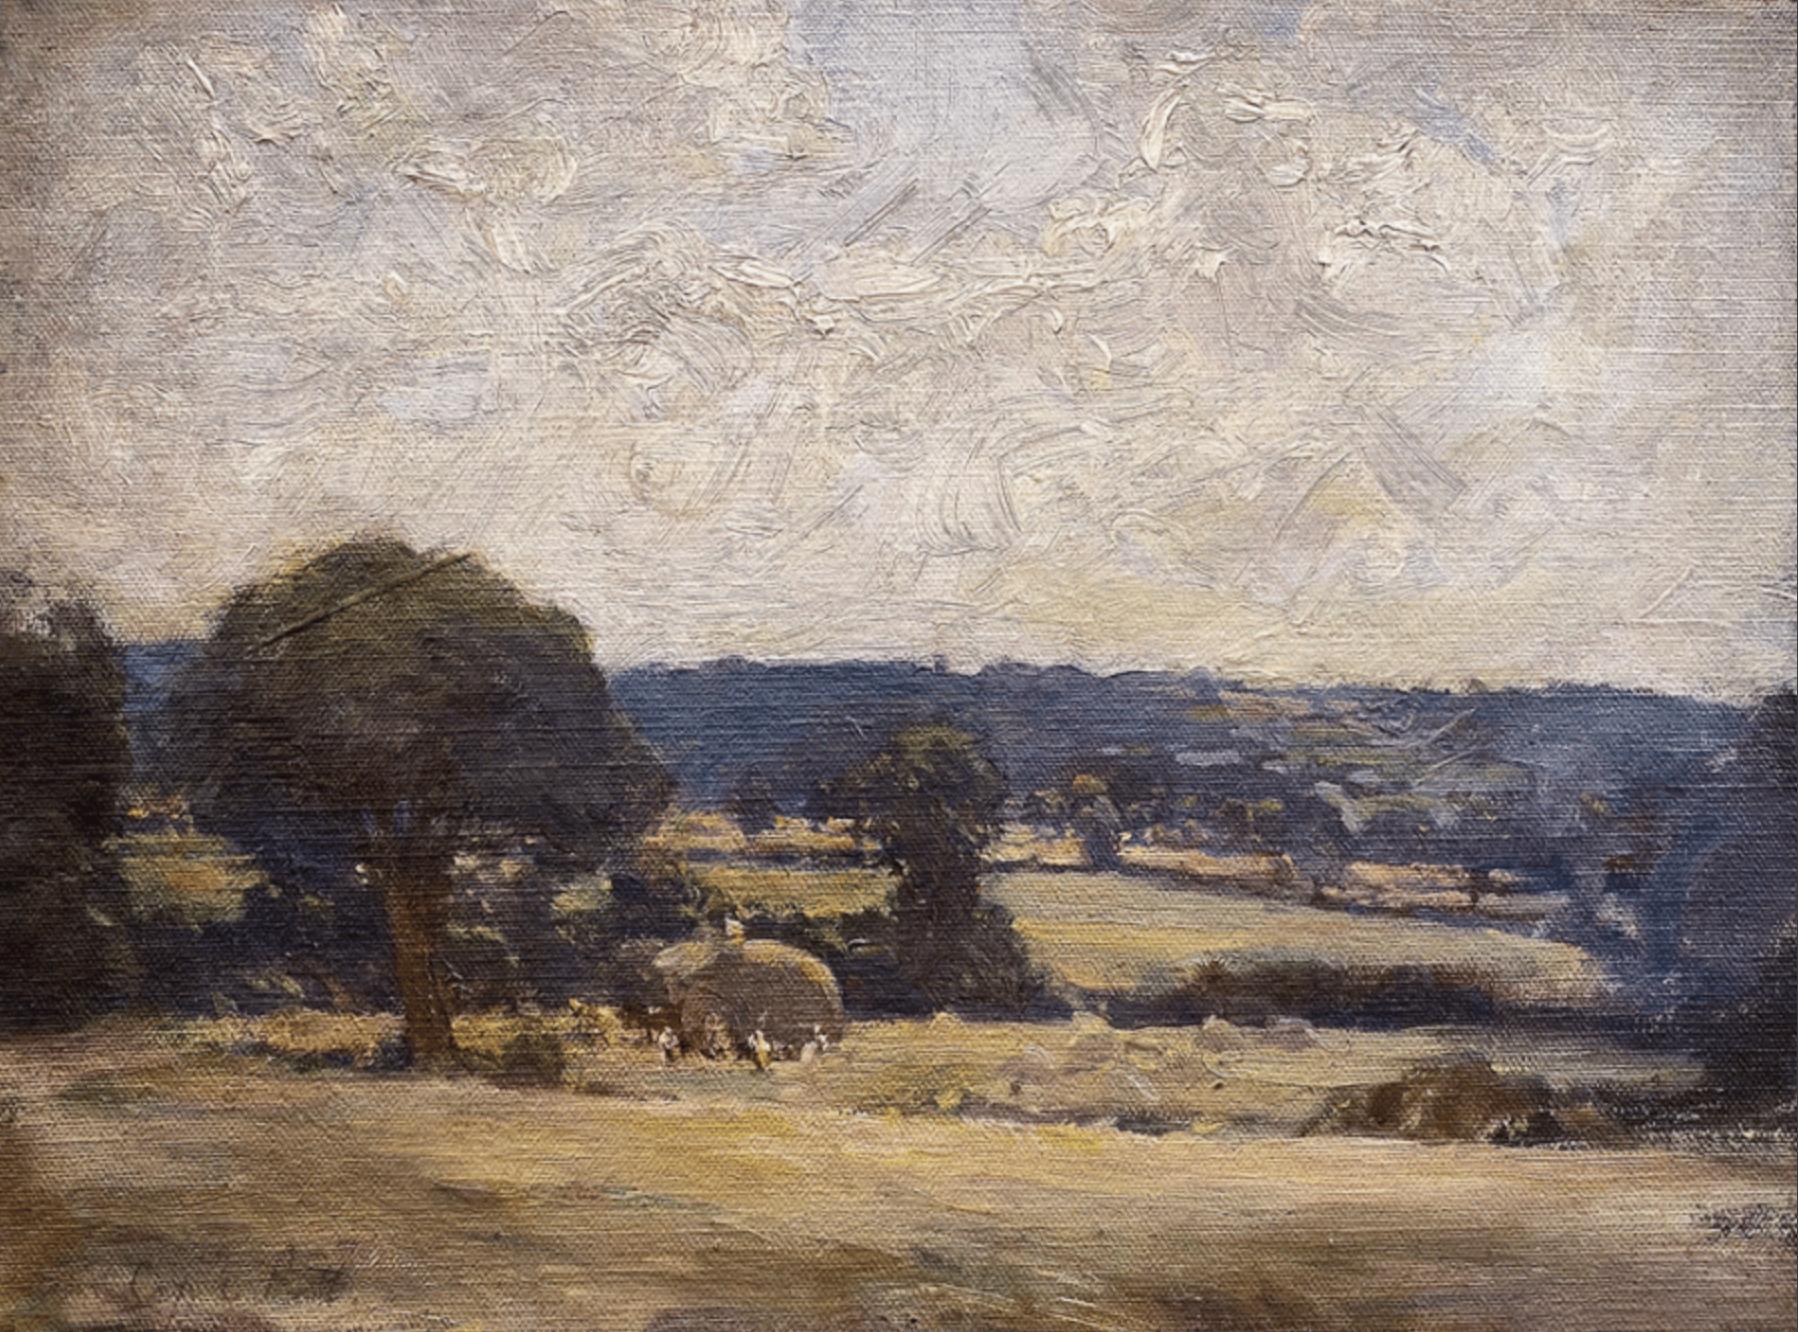 Septimus Edwin Scott Landscape Painting - Harvest Time, Oil on Canvas, 20th Century Signed British Landscape